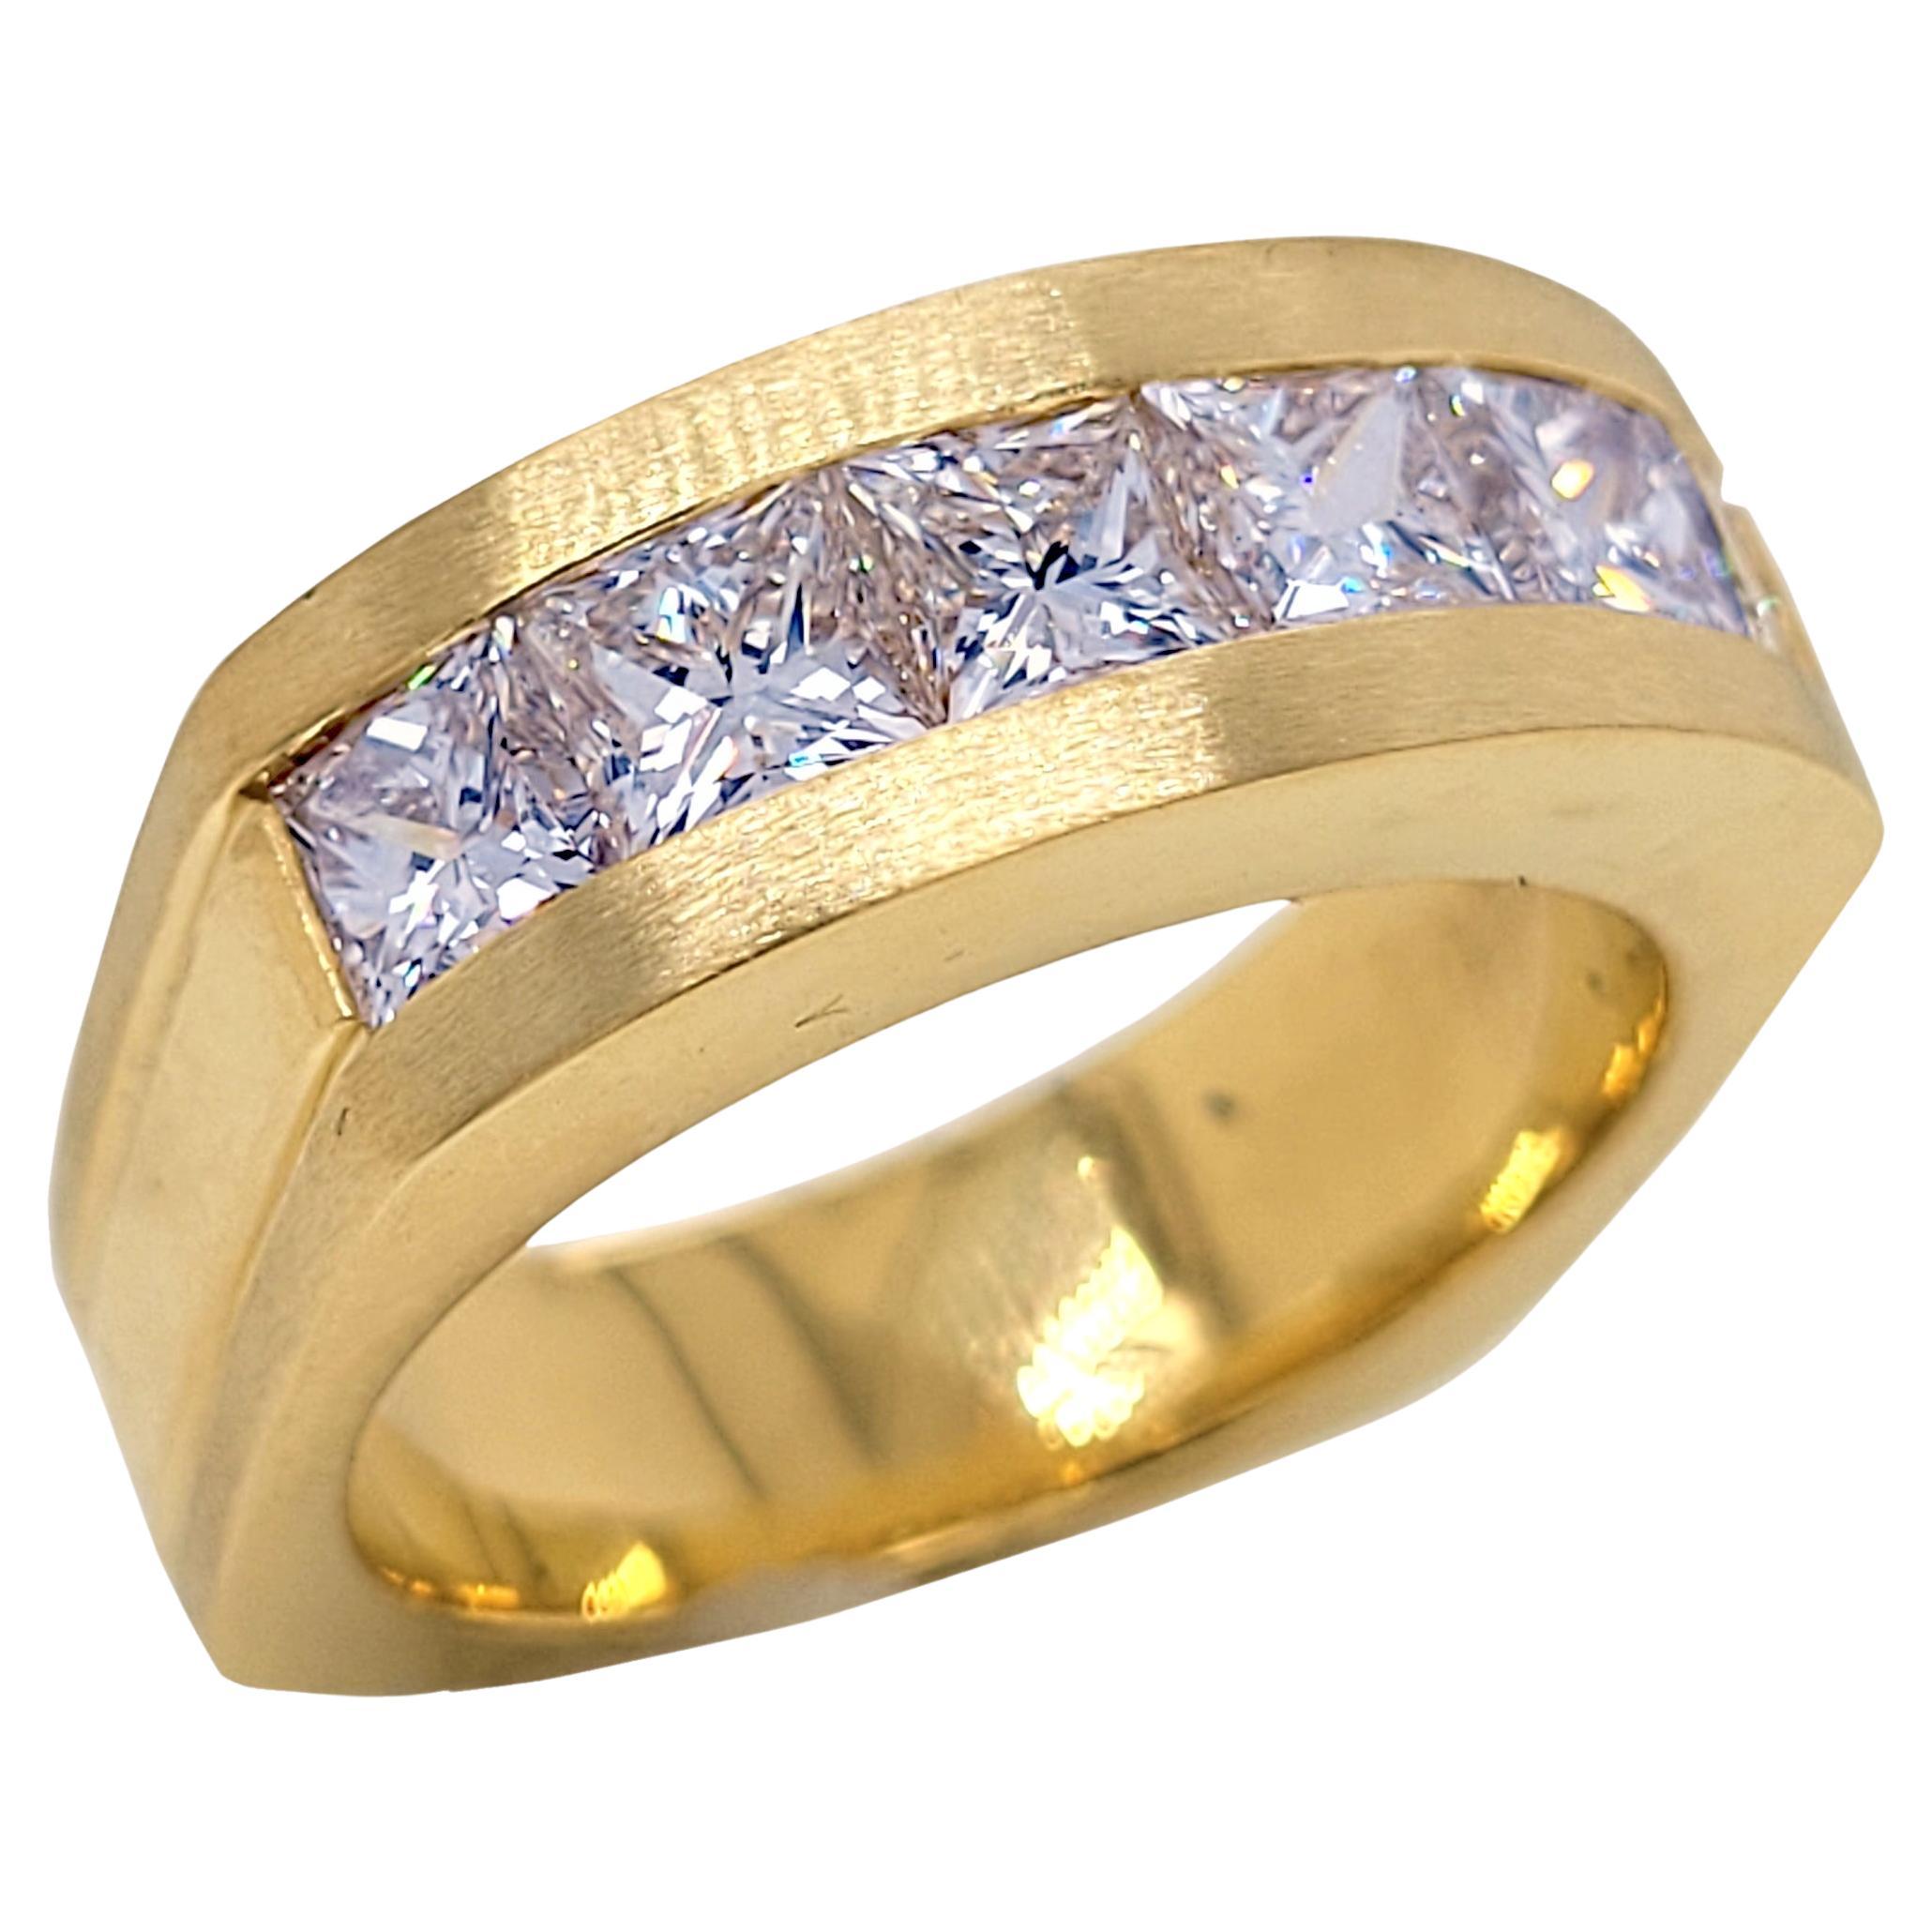 3.14 Carat Princess Cut Diamond 18 Karat Gents Ring